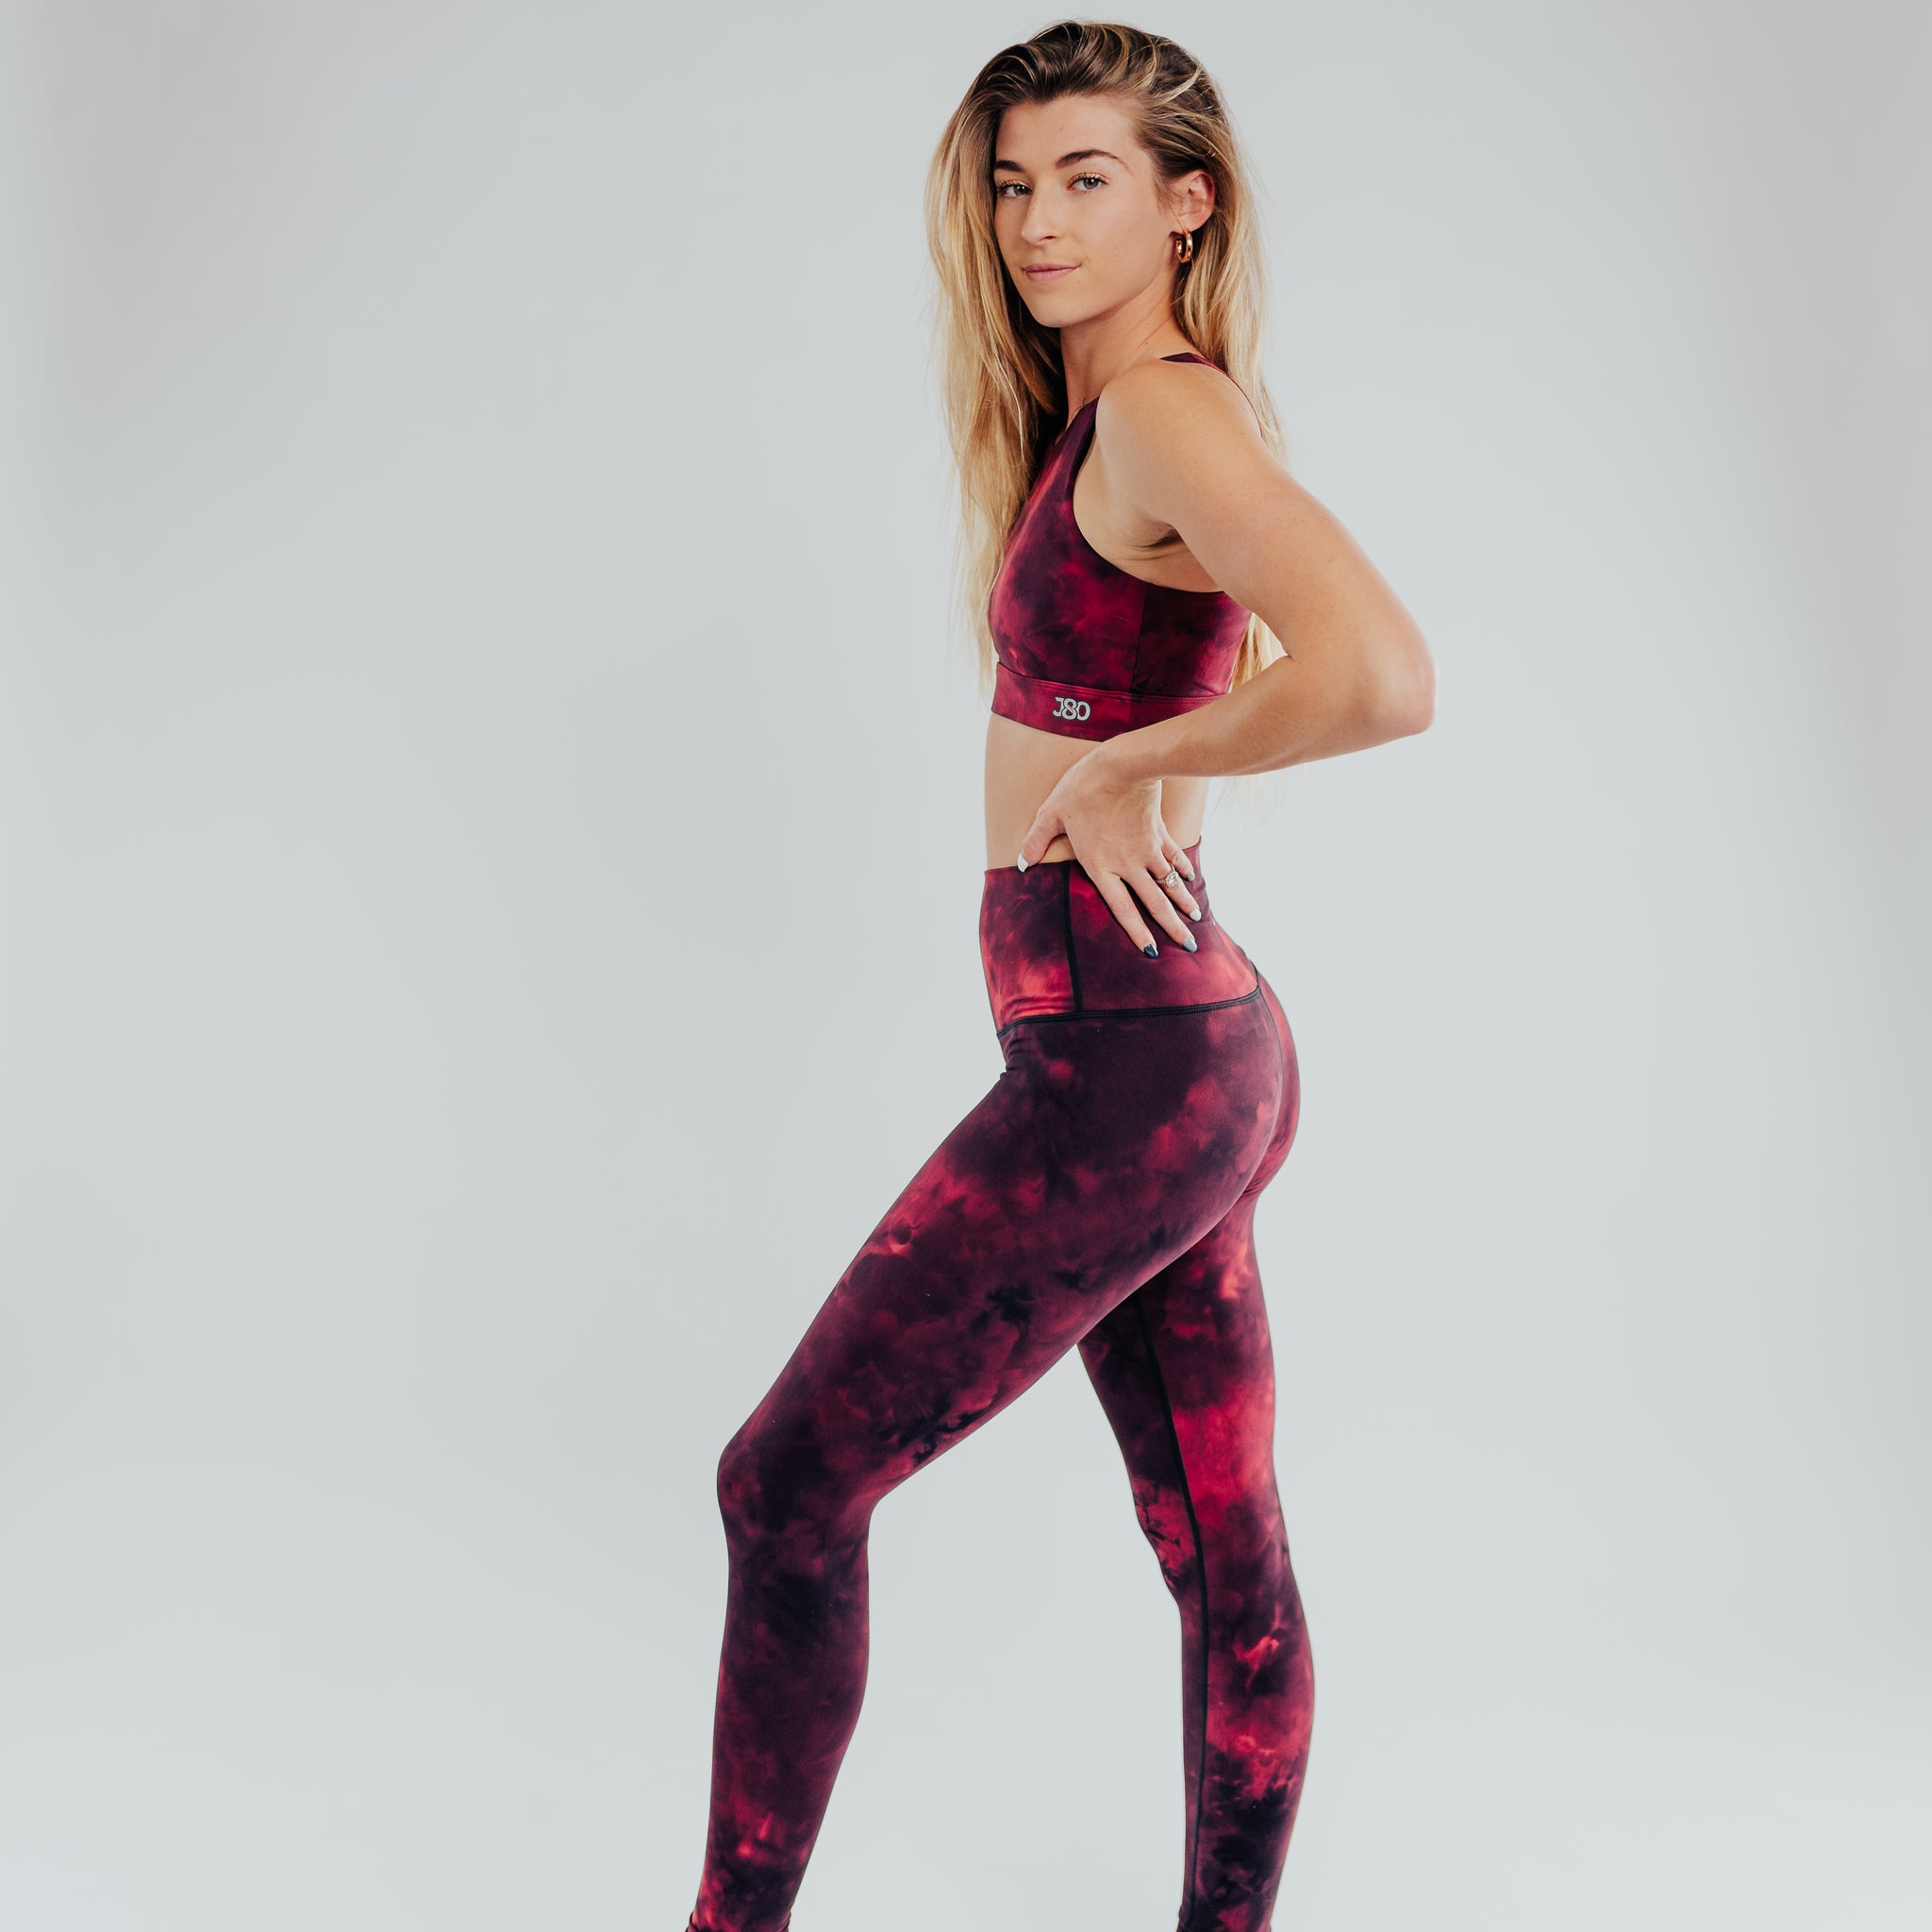 Athleta Elation 7/8 Tight Leggings Pink Camo Yoga Workout Pants